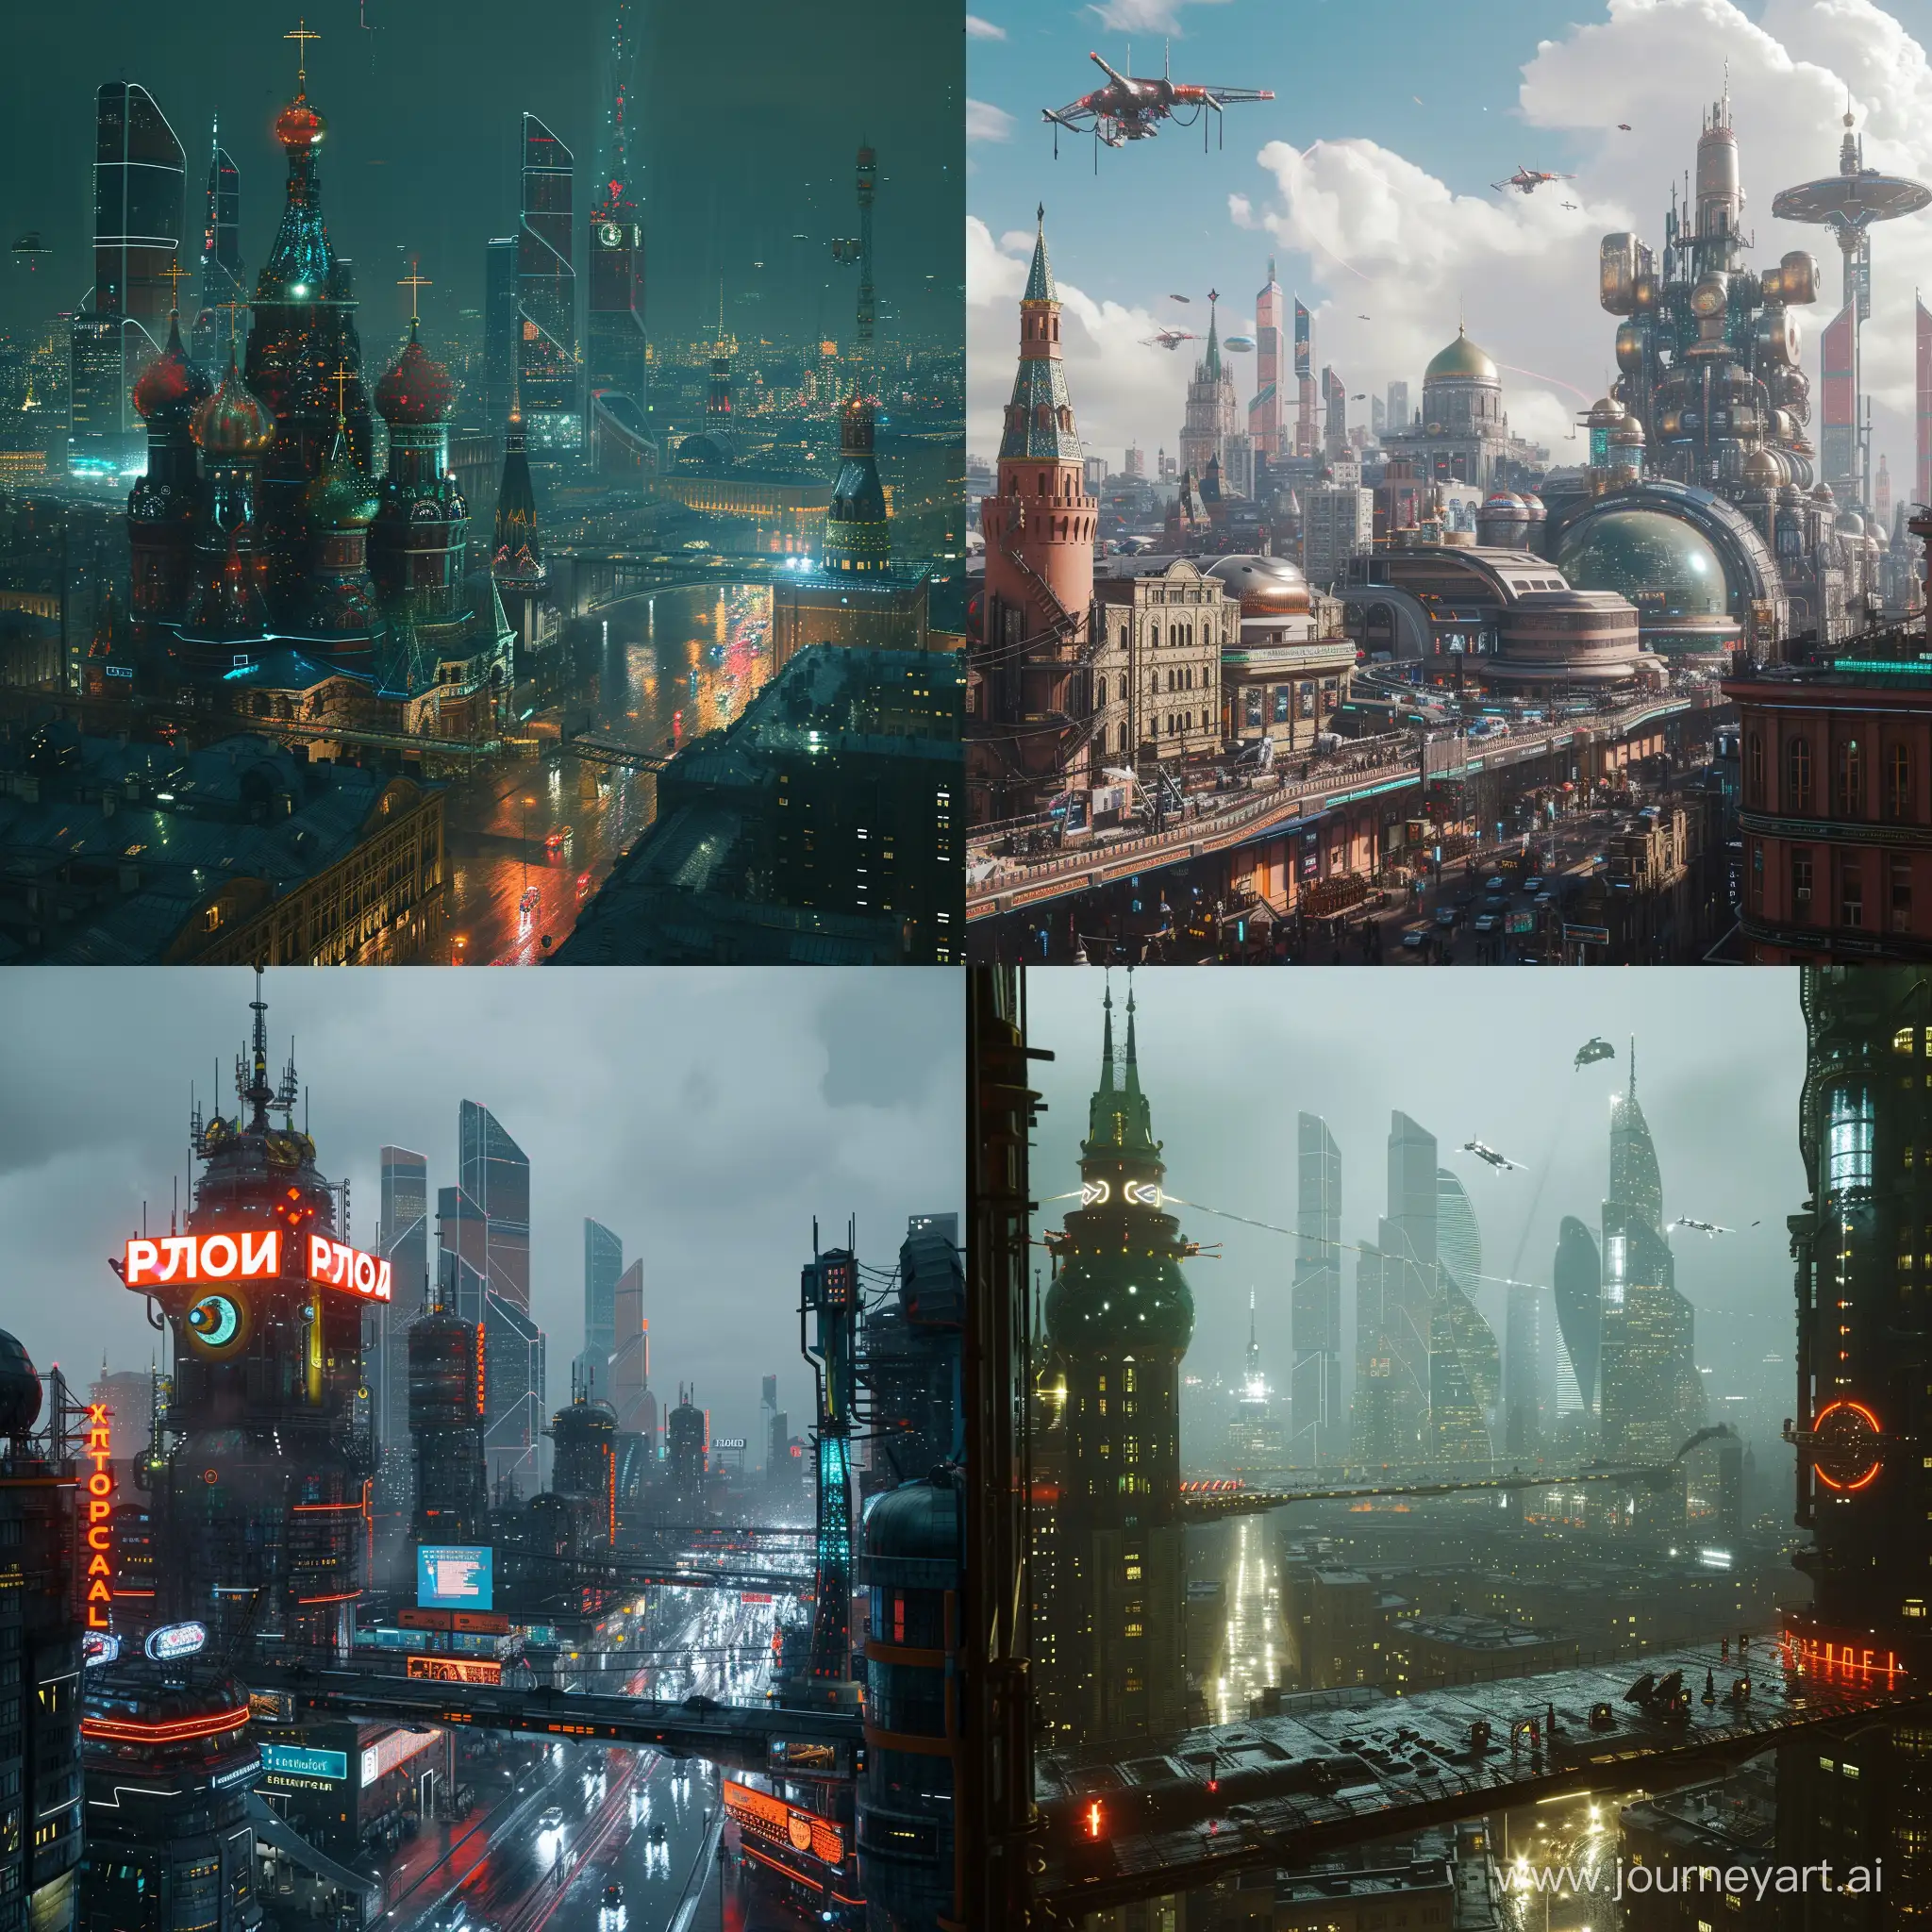 Futuristic Moscow, dystopian postcyberpunk, in cinematic style